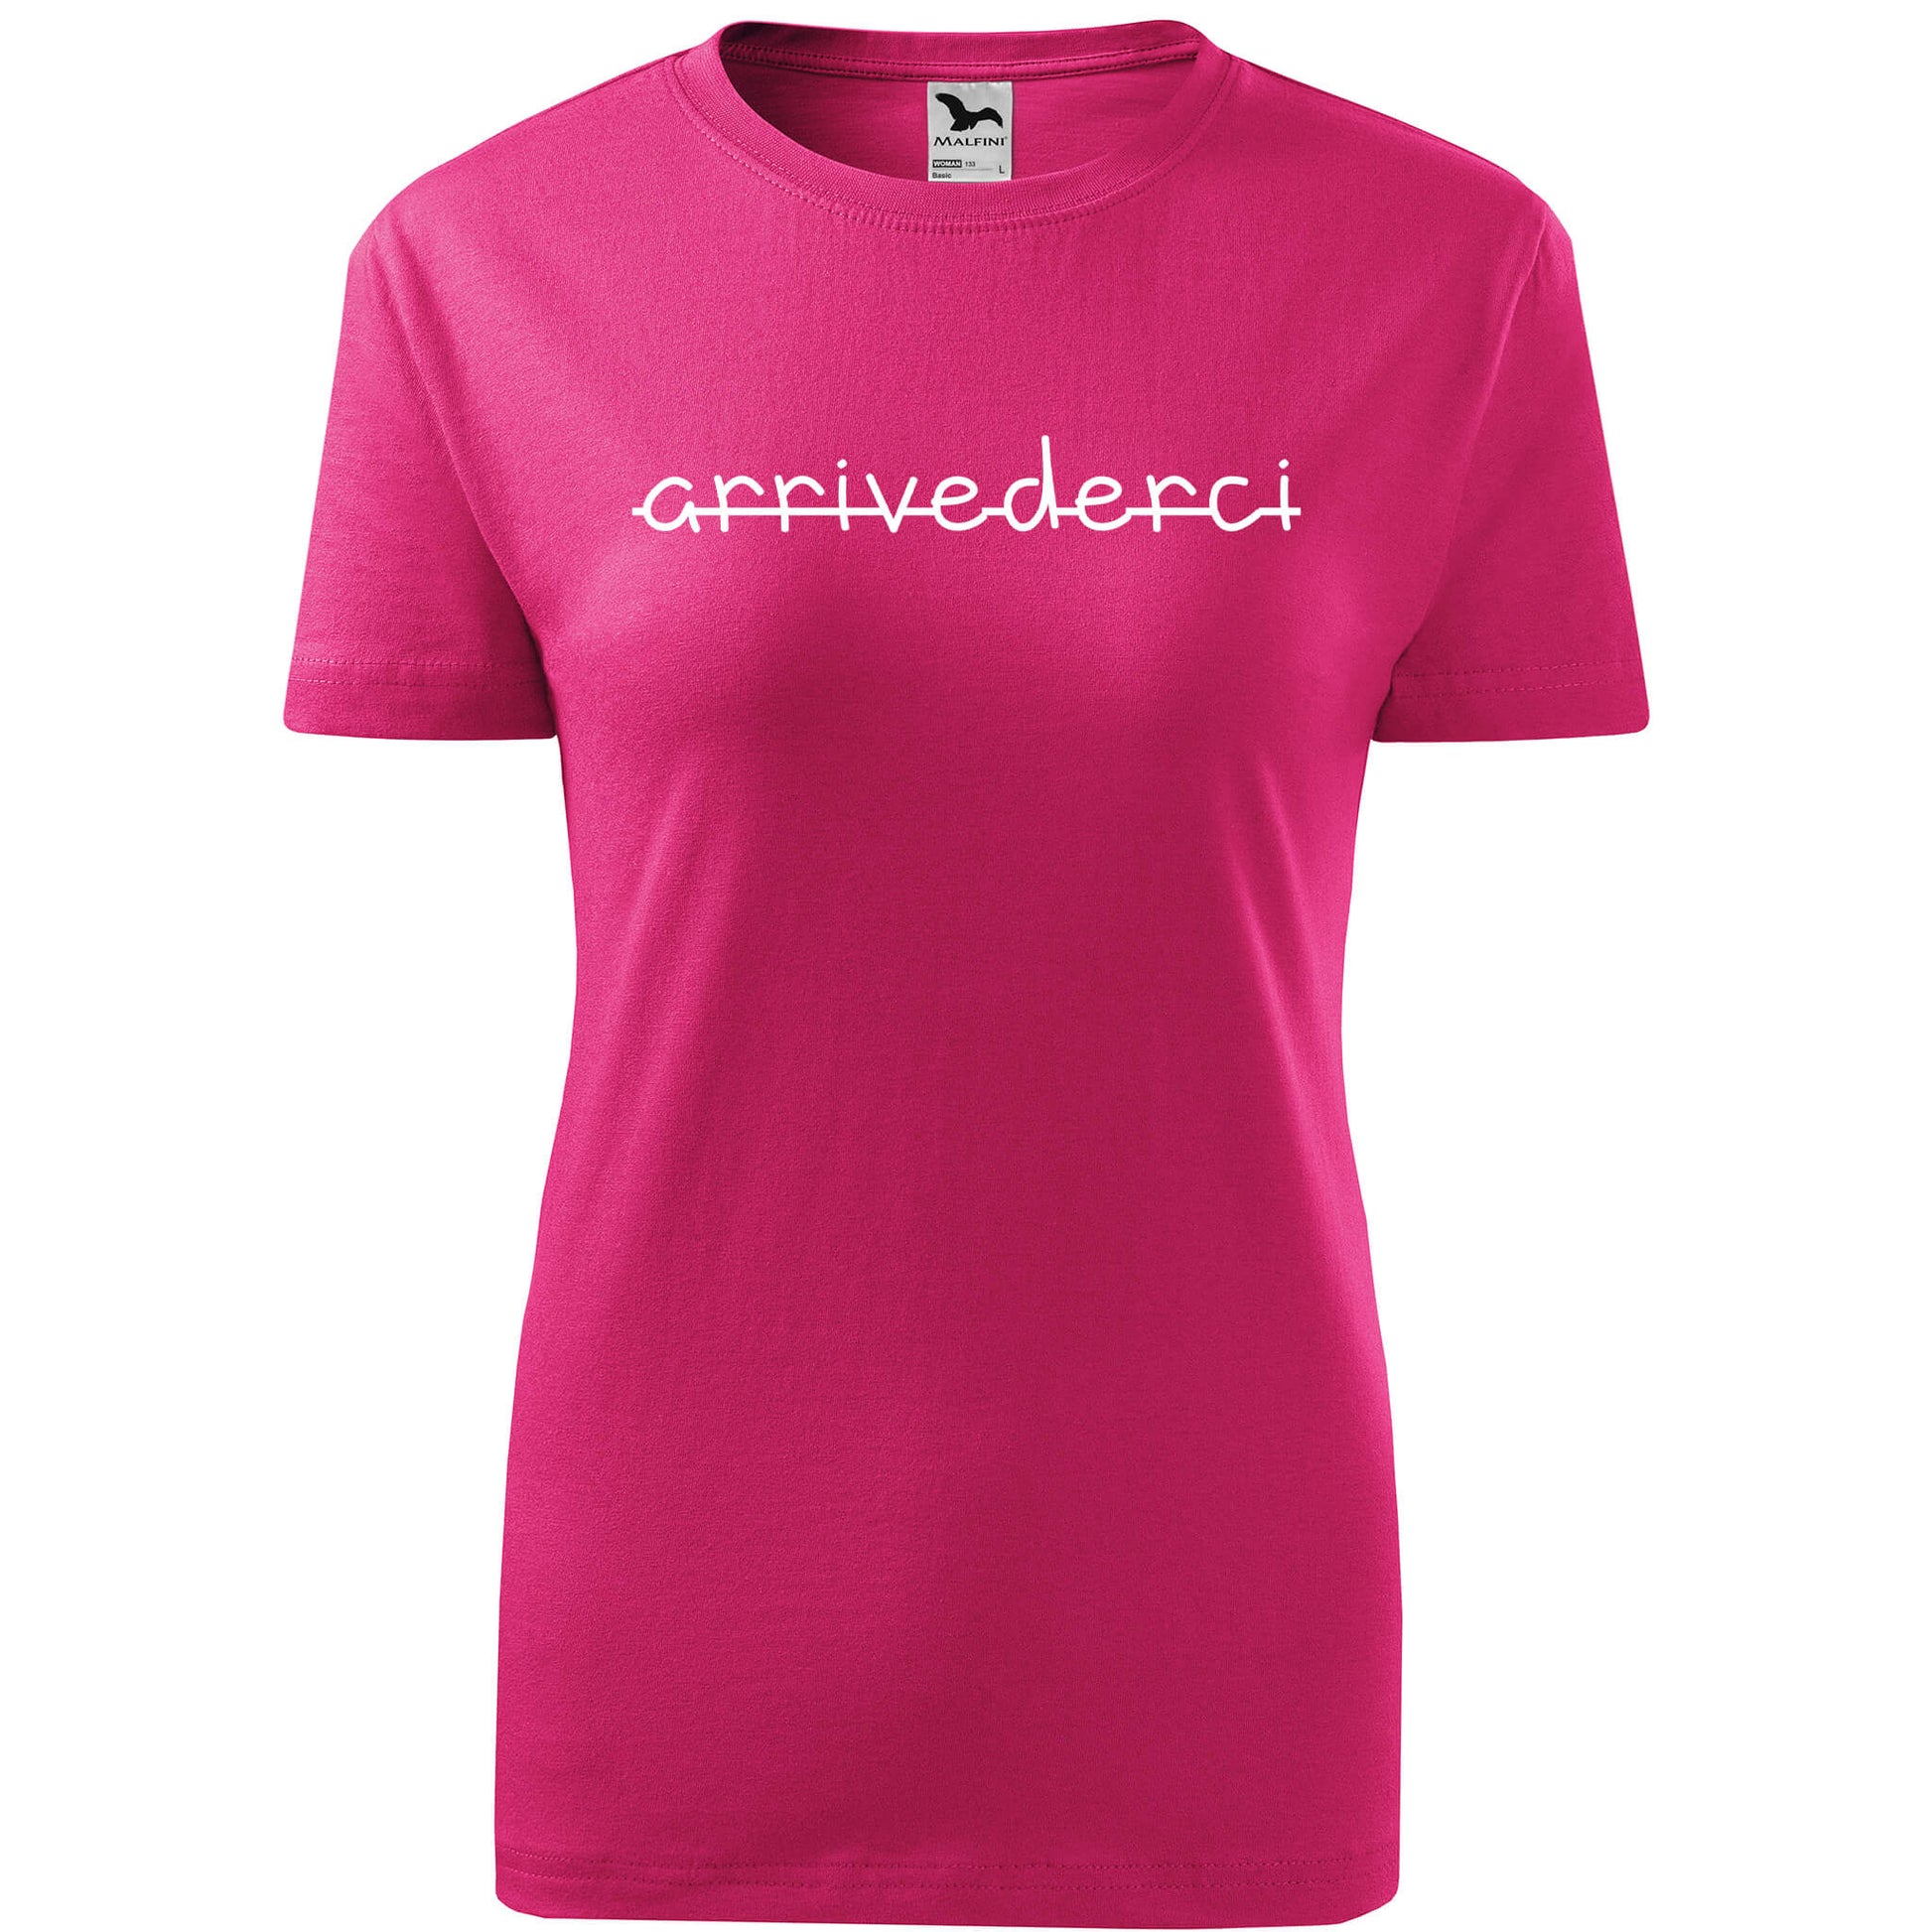 T-shirt - arrivederci - rvdesignprint